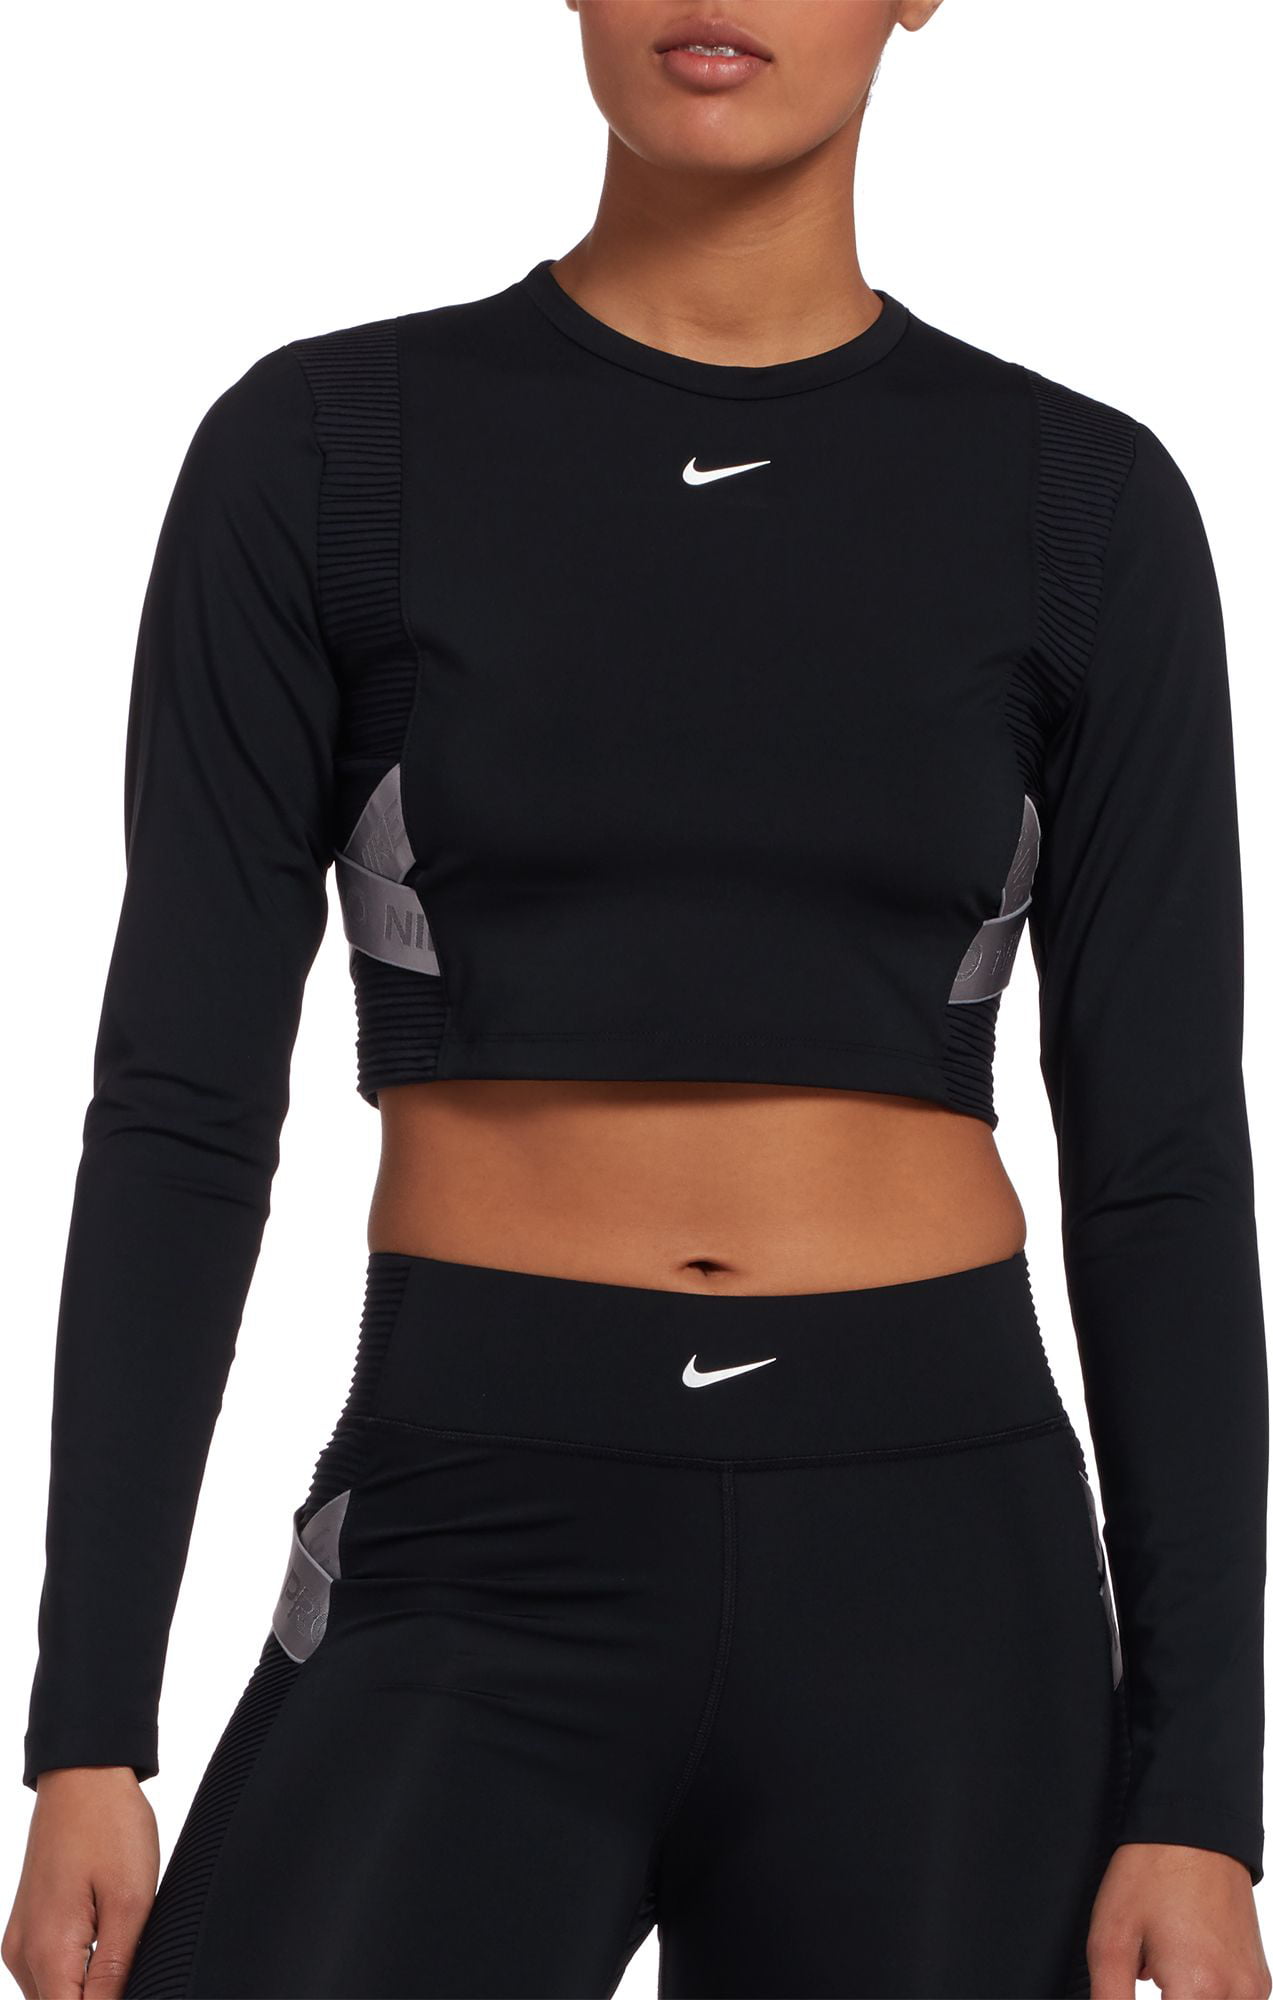 Nike - Nike Women's AeroAdapt Pro Long Sleeve Crop Top - Walmart.com - Walmart.com